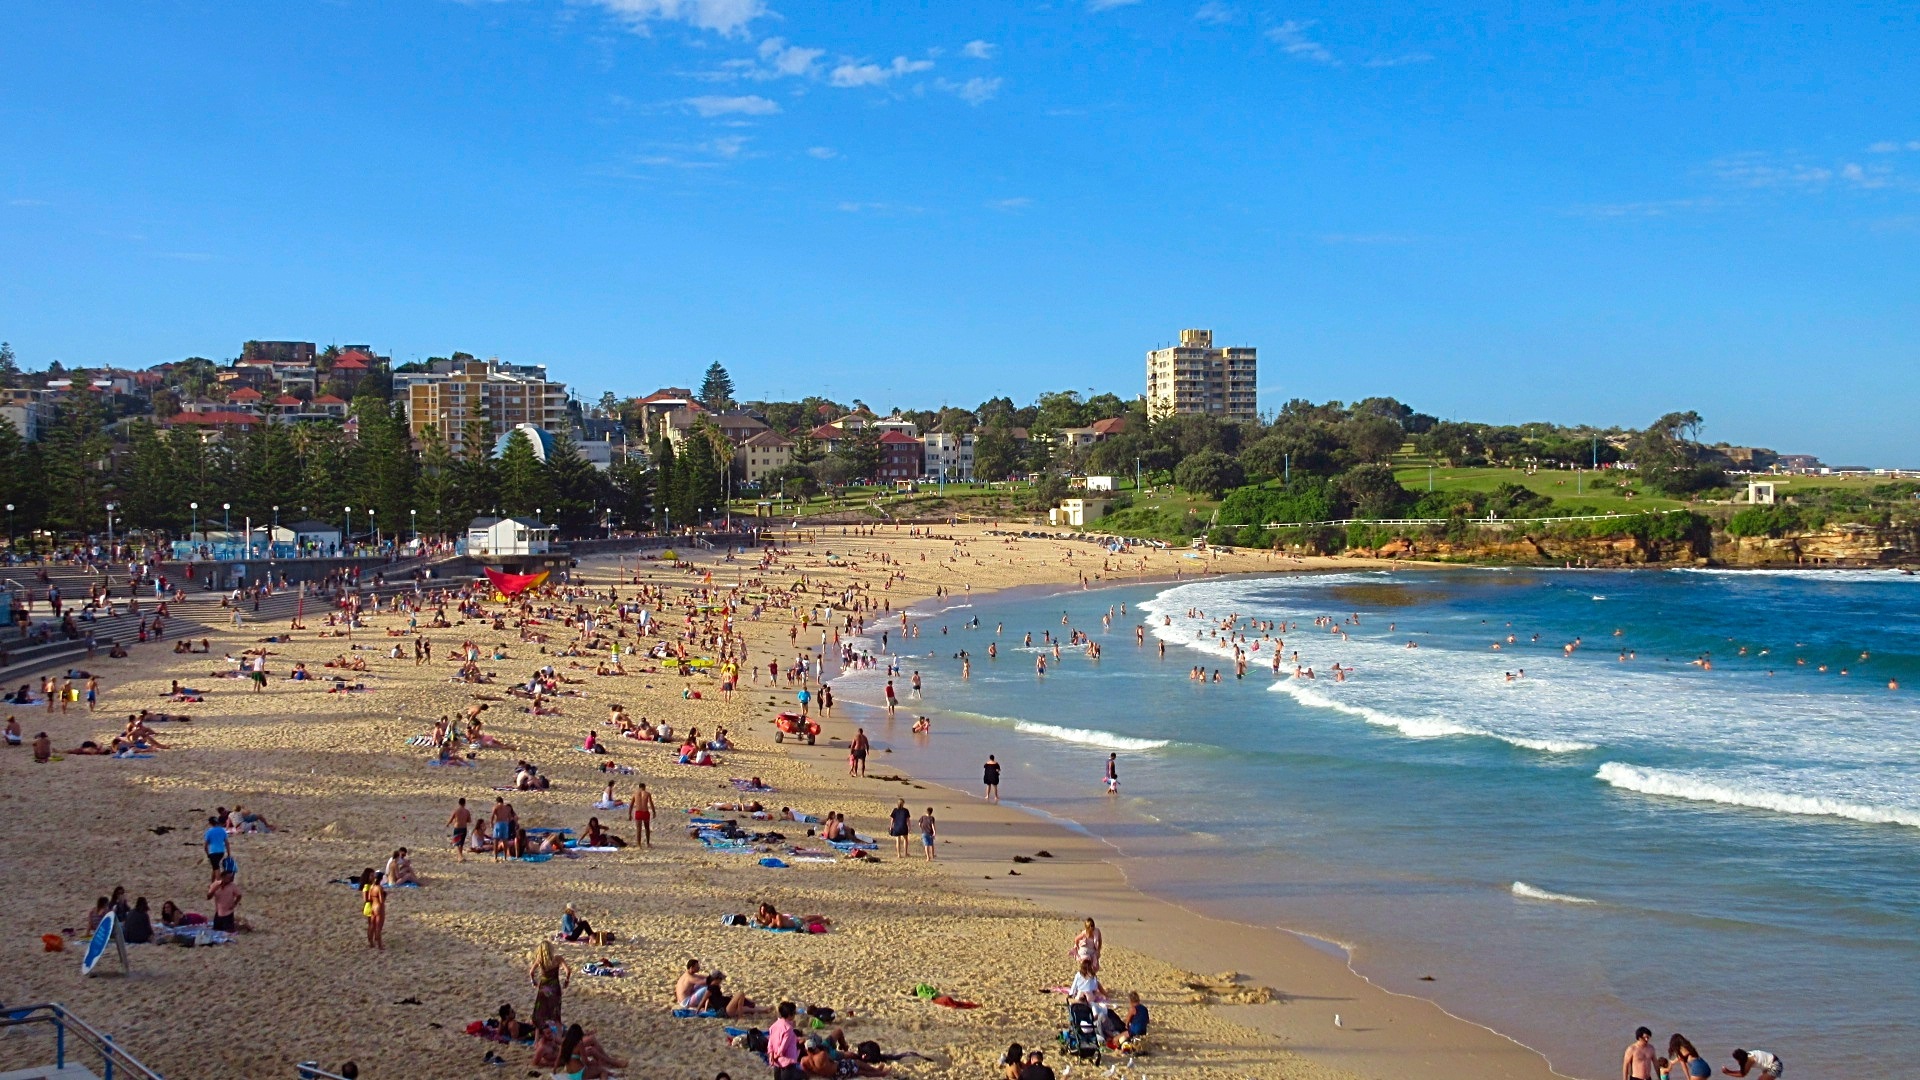 Busy-Chaotic-Coogee-Beach-Sydney-Australis-bikini-babes-sexy-surf-sand-ocean-hotels-pubs-food-restaurants